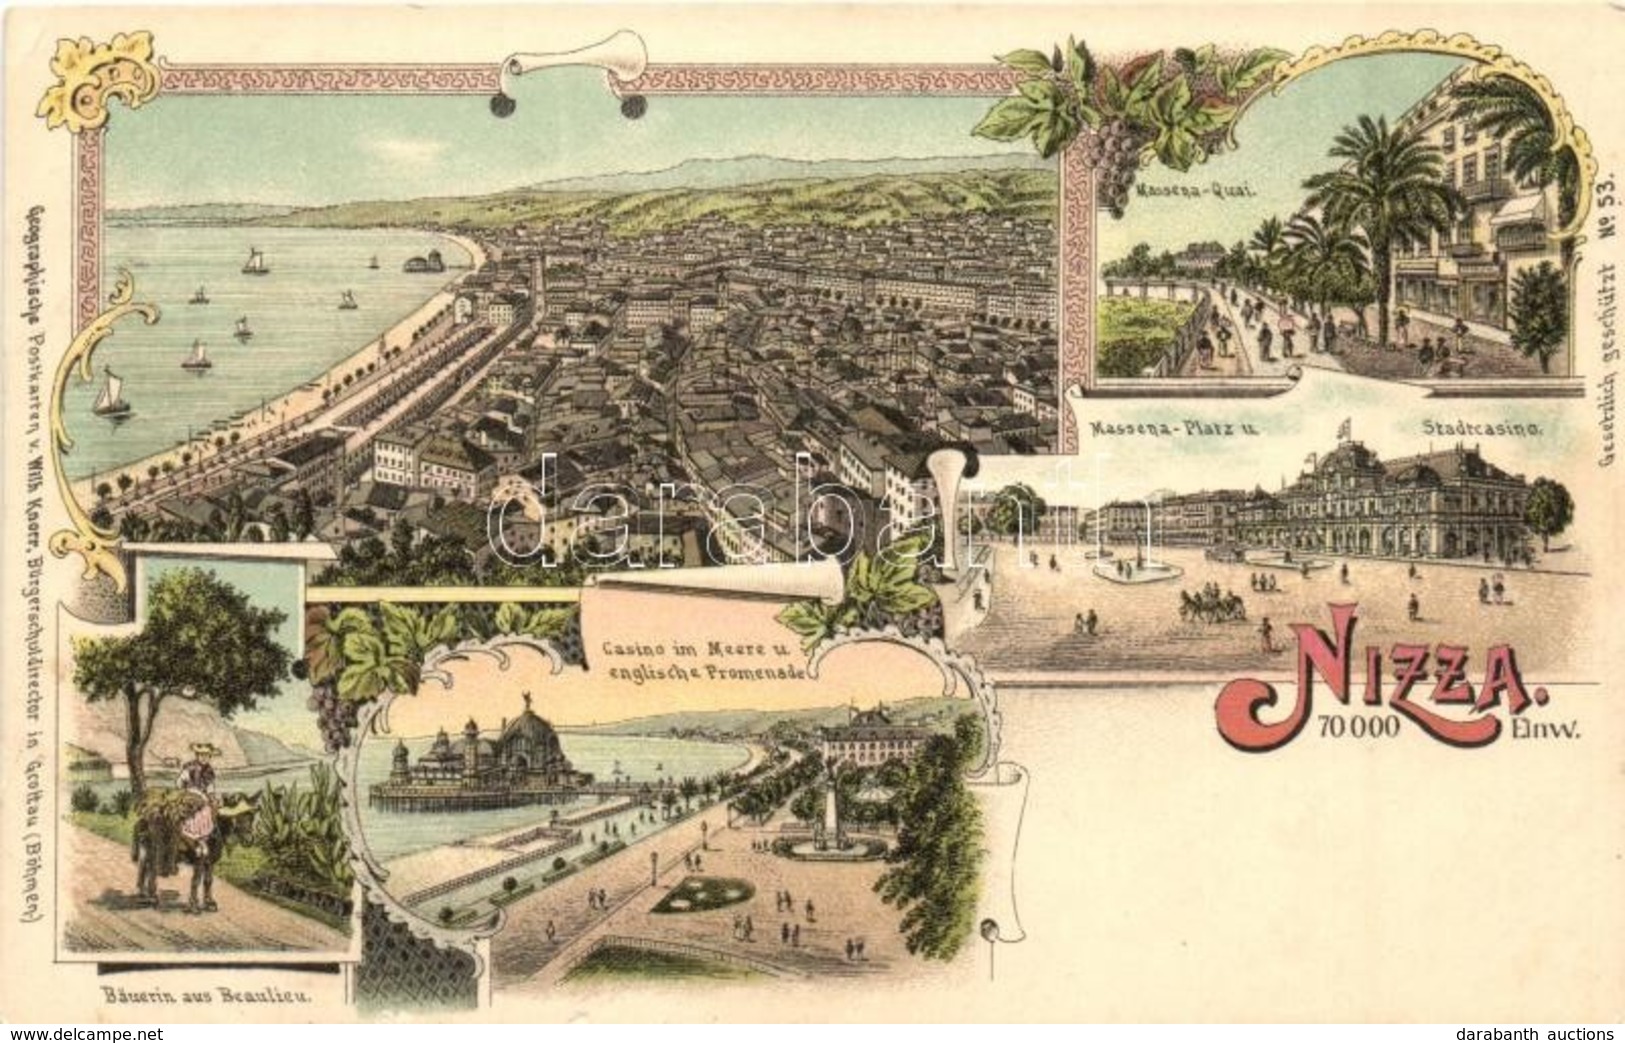 ** T2/T3 Nice, Nizza; Massena Quai Und Platz, Stadtcasino, Bauerin Aus Beaulieu. Geographische Postkarte V. Wilhelm Knor - Unclassified